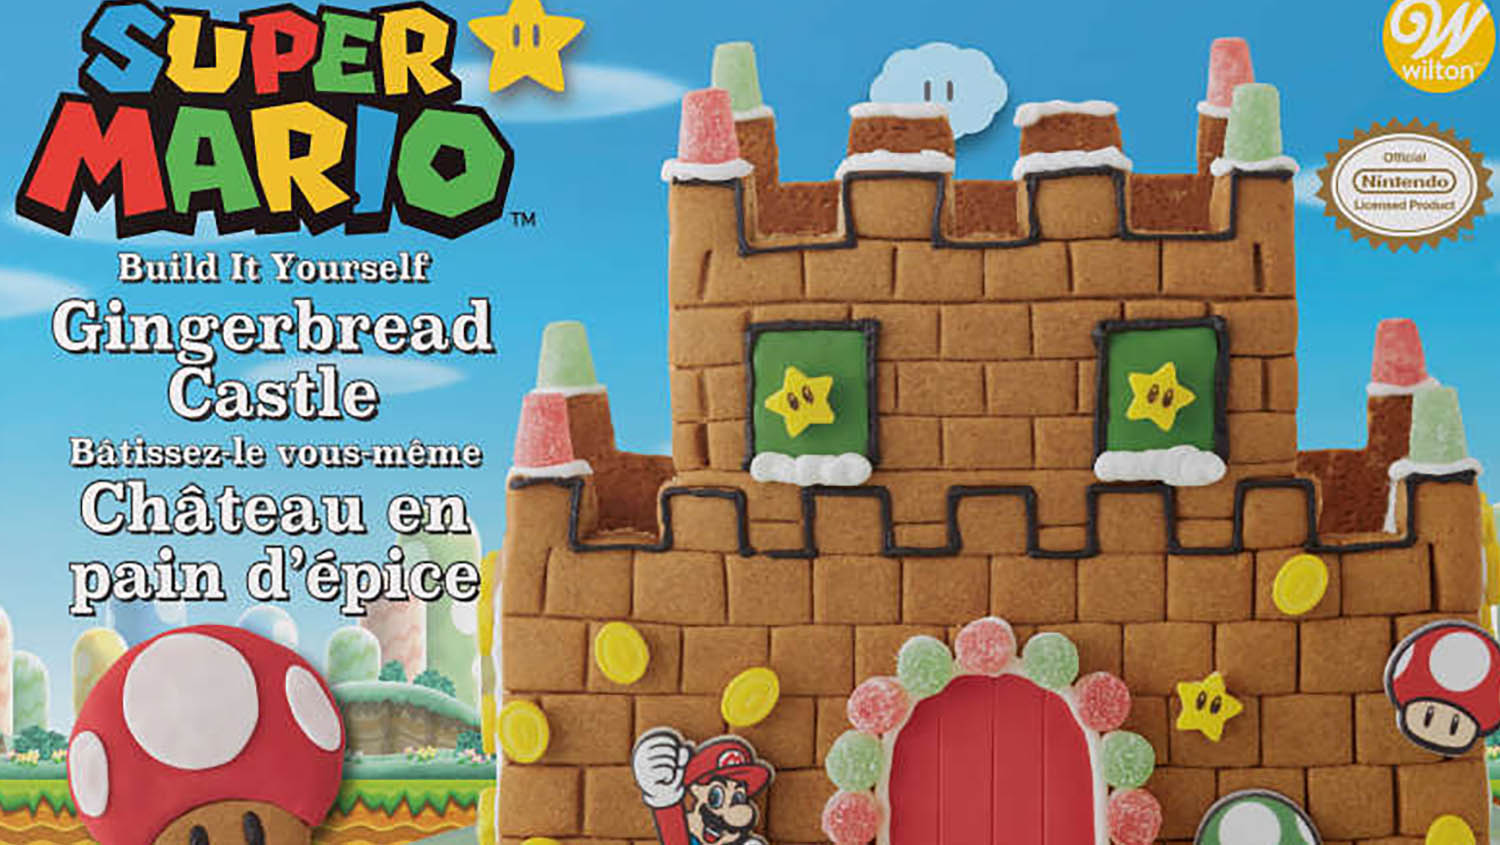 Super Mario gingerbread house